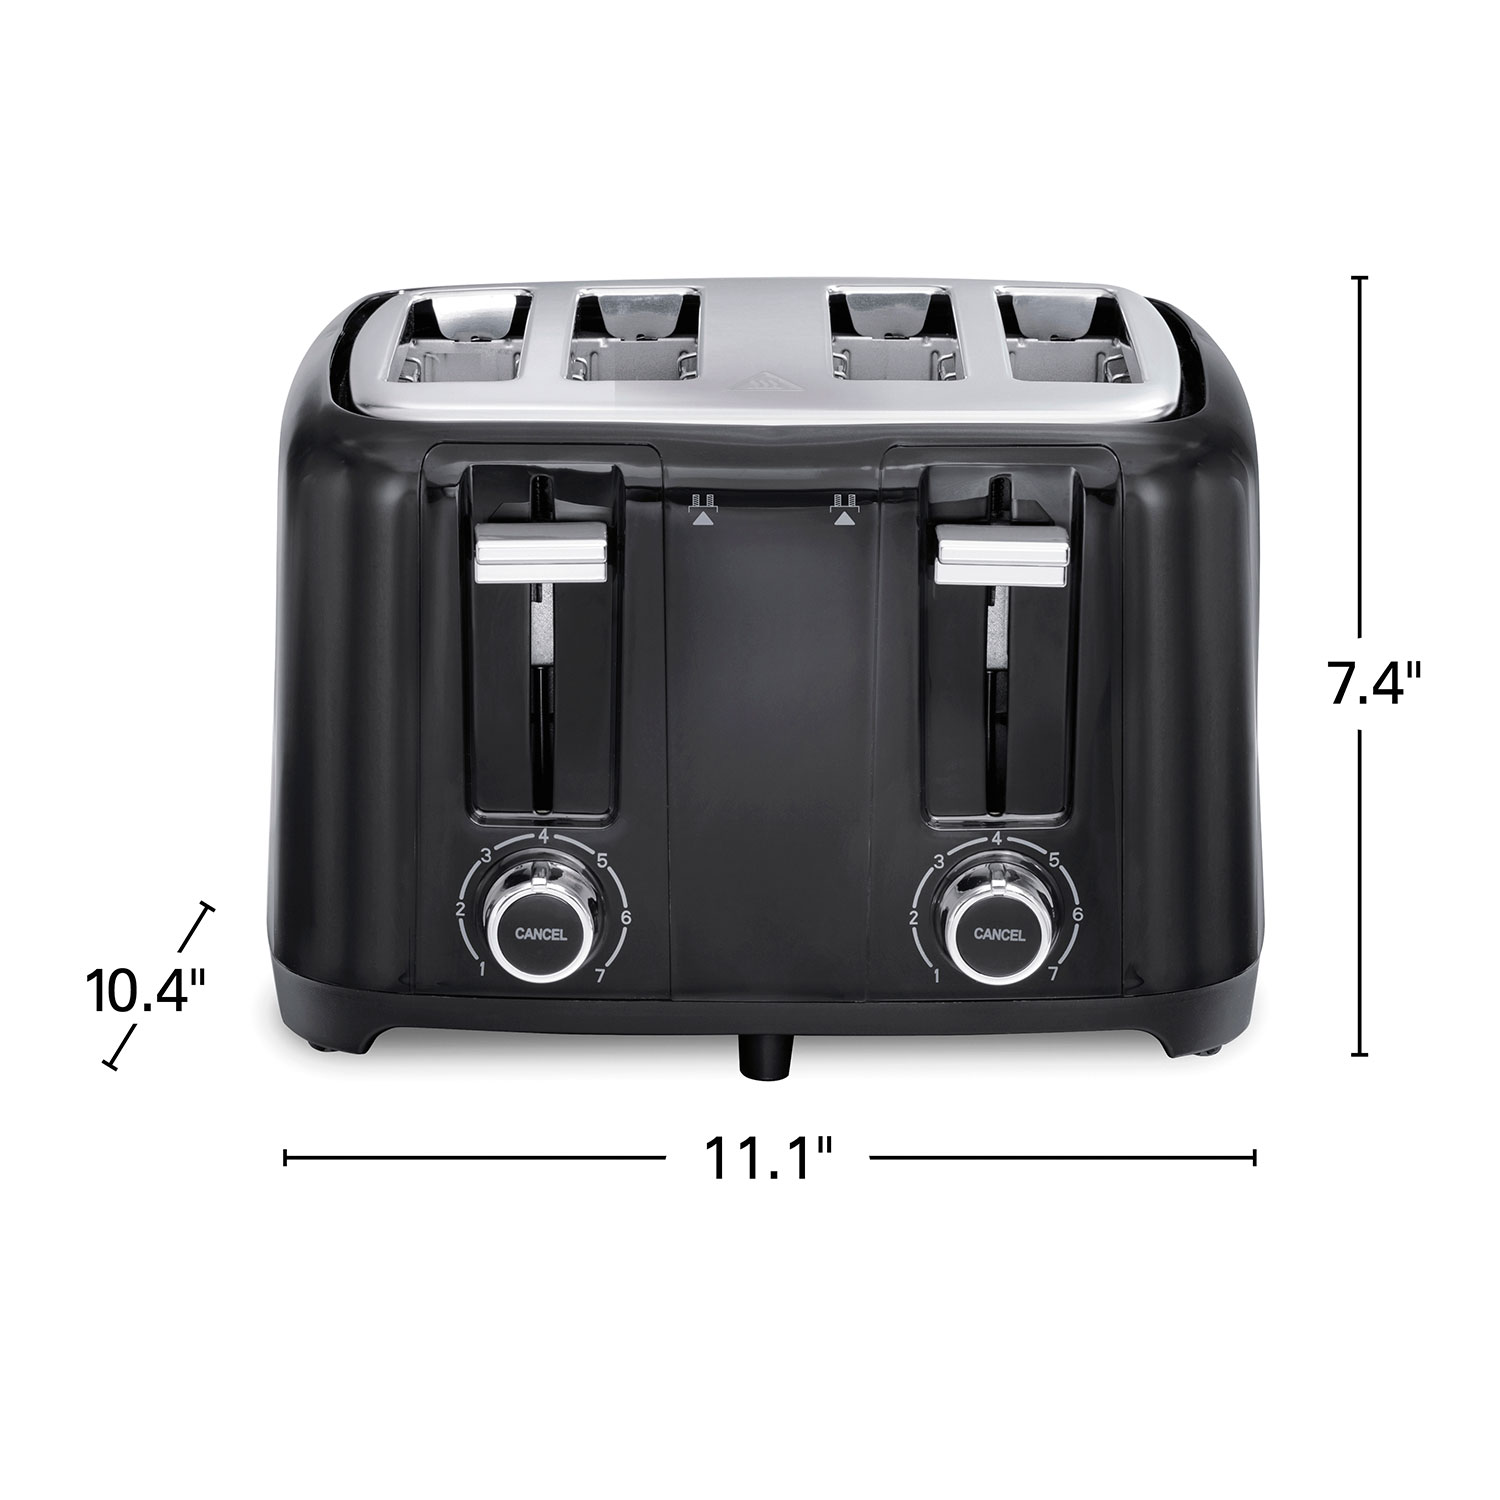 Black + Decker 4-Slice Extra Wide Slot Toaster